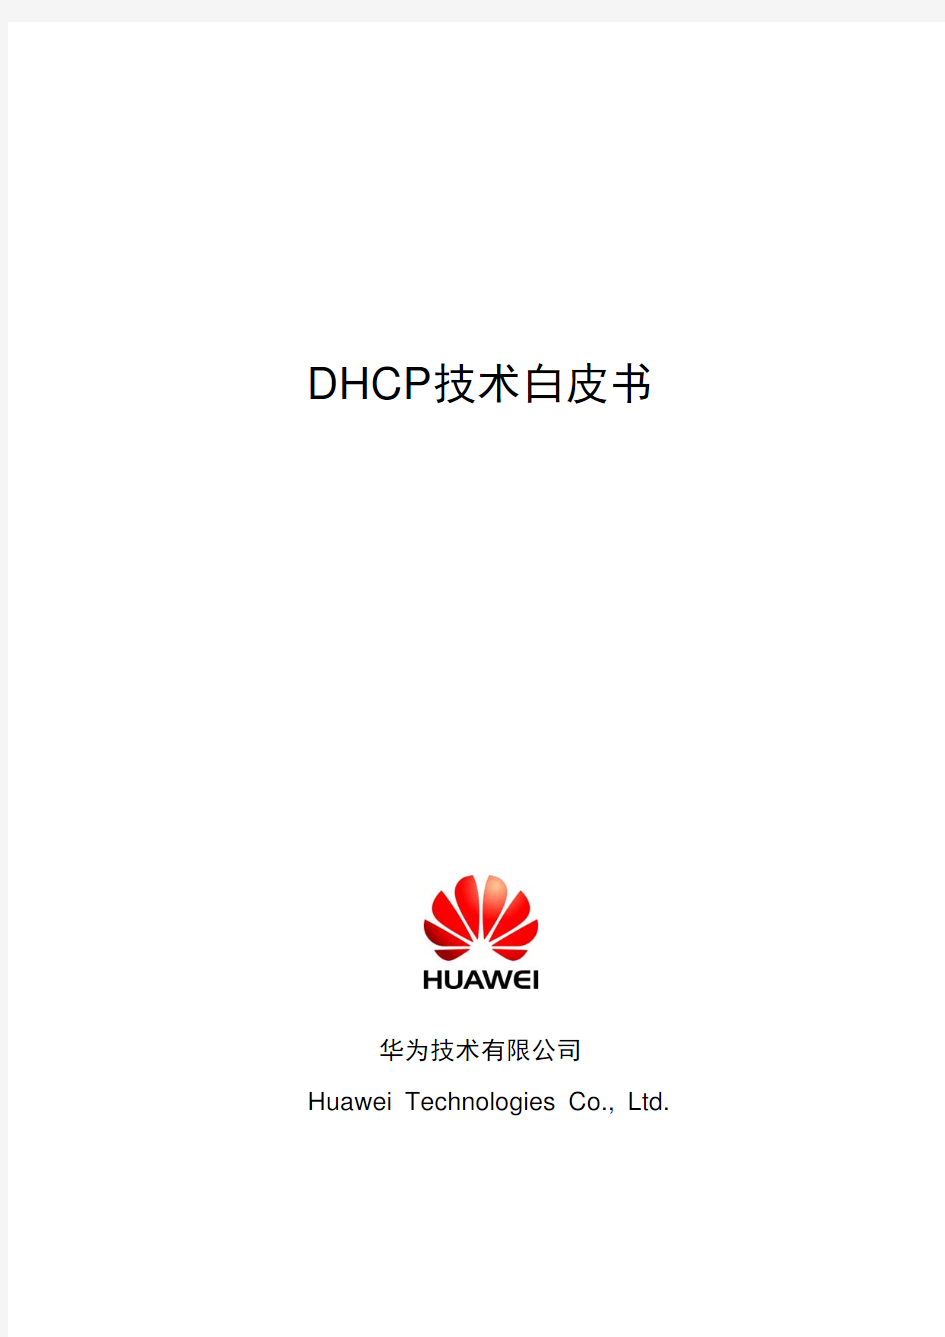 DHCP技术白皮书